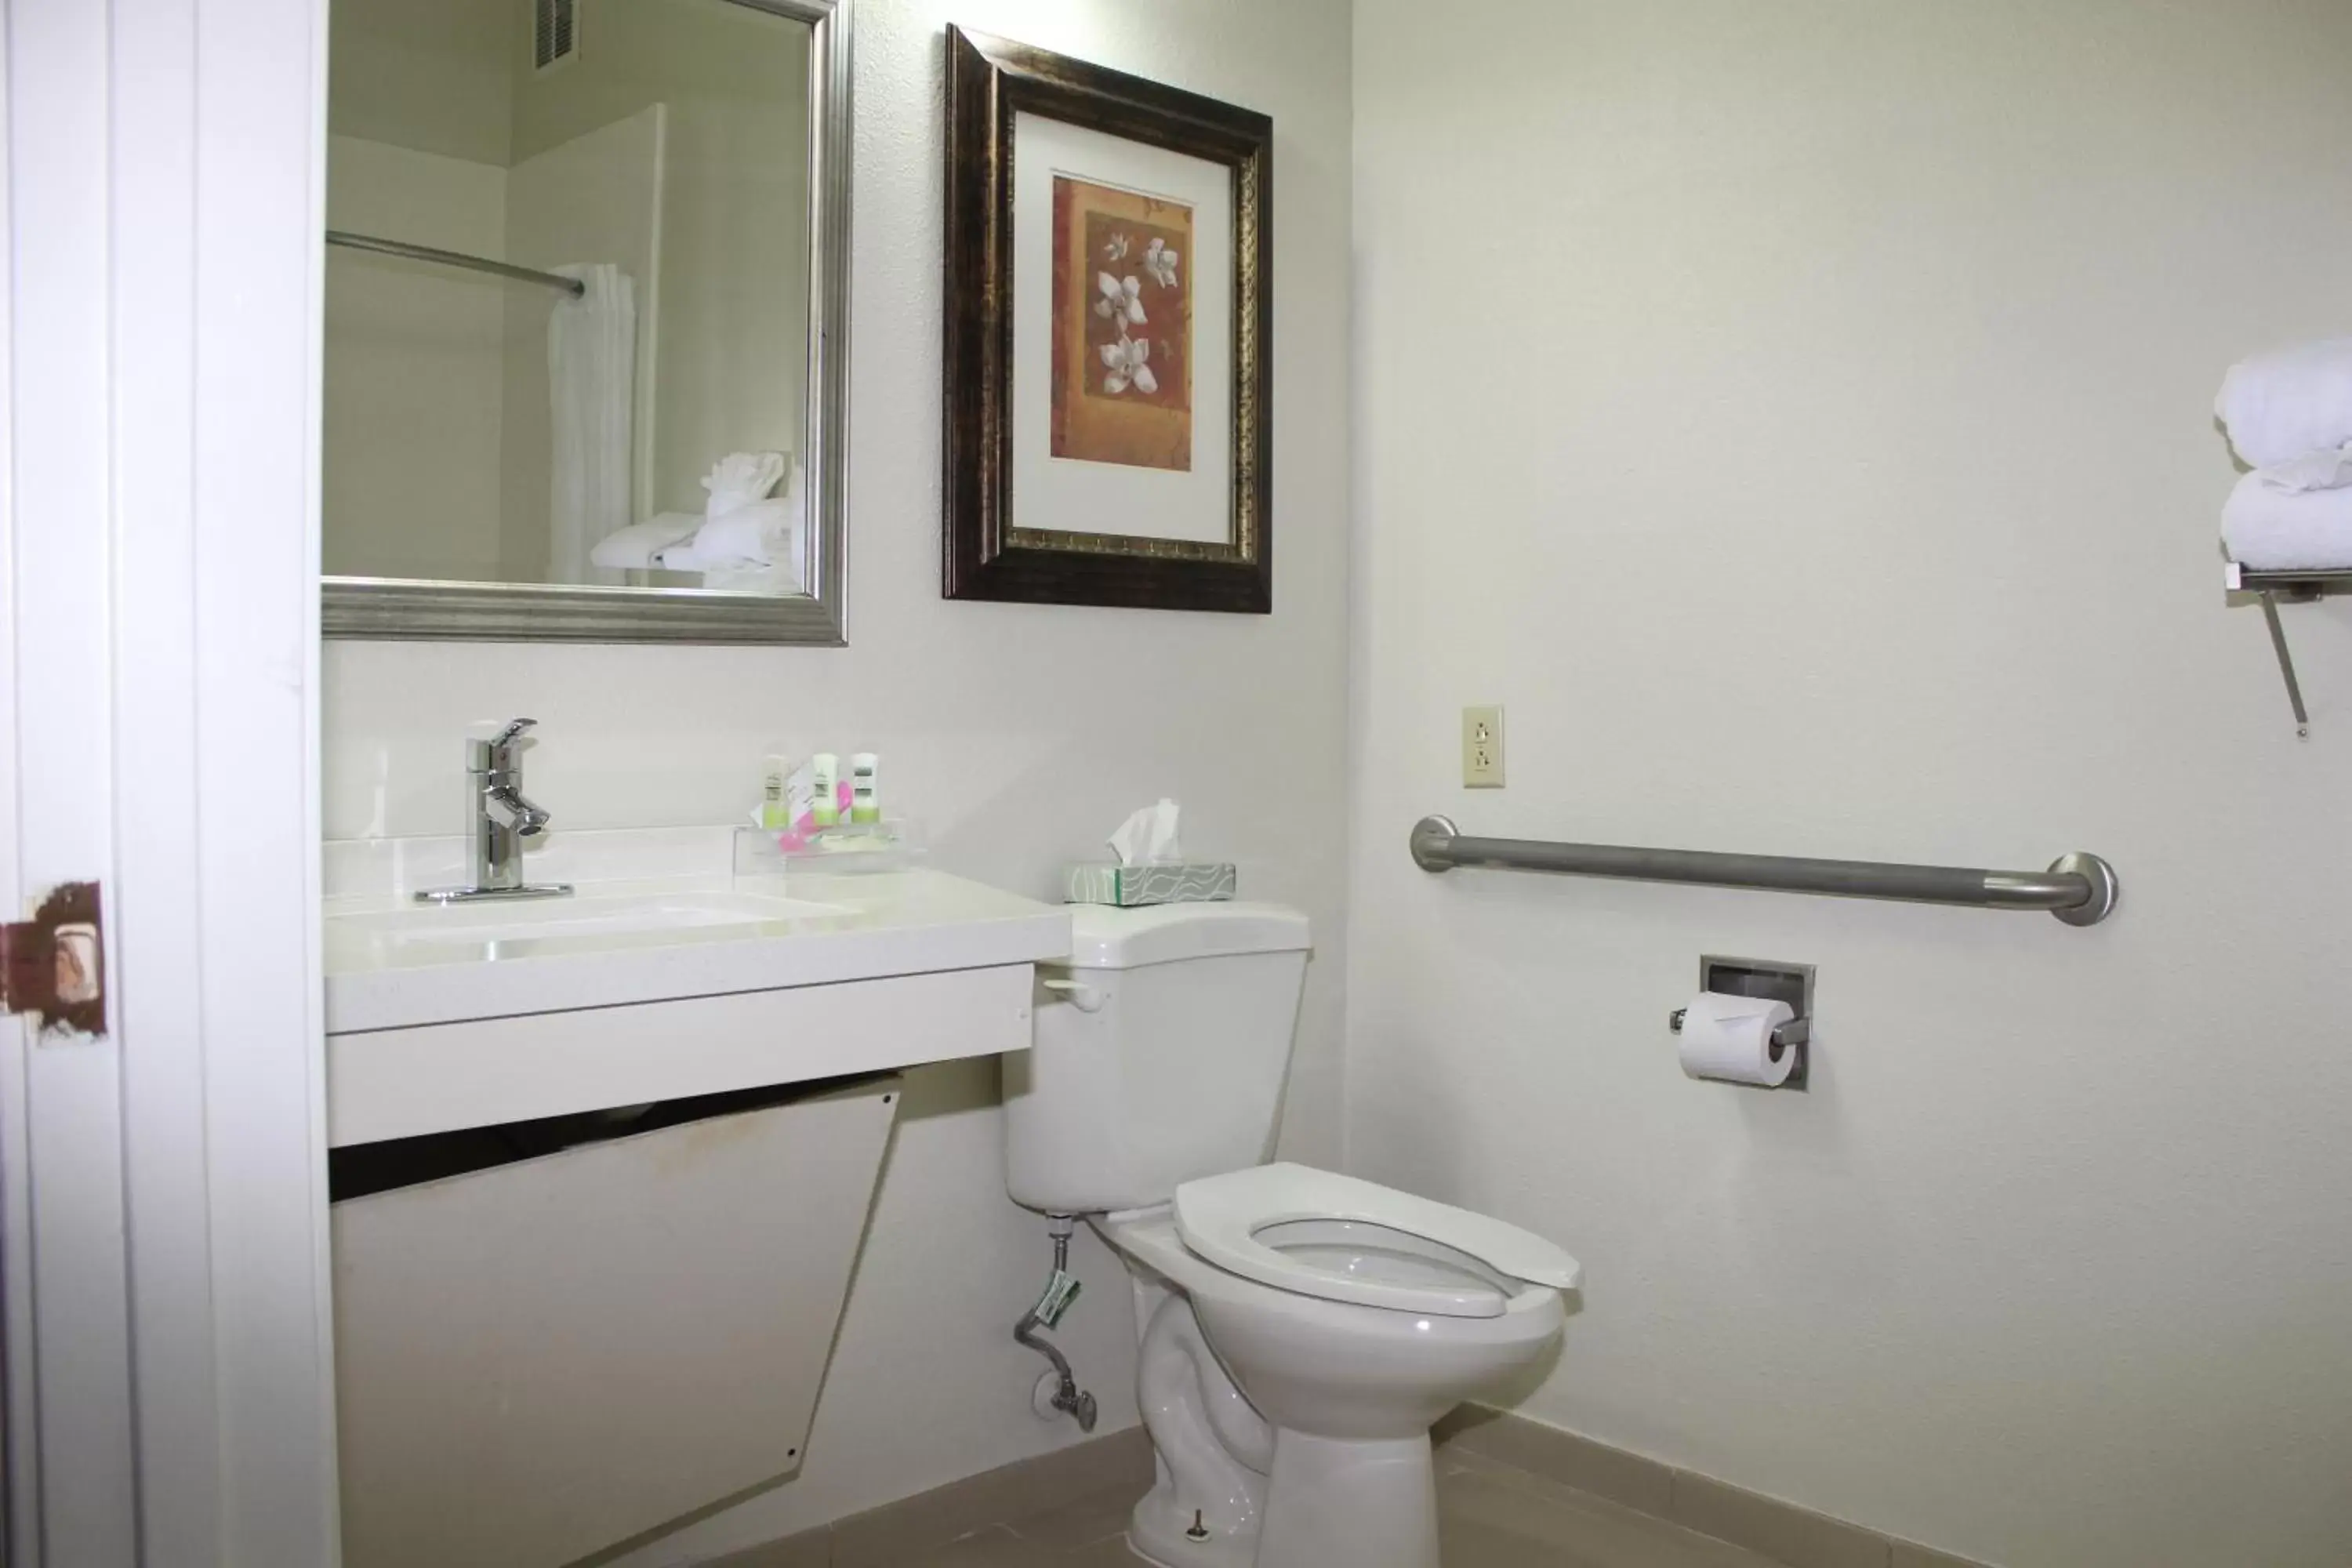 Bathroom in Country Inn & Suites by Radisson, Nashville, TN